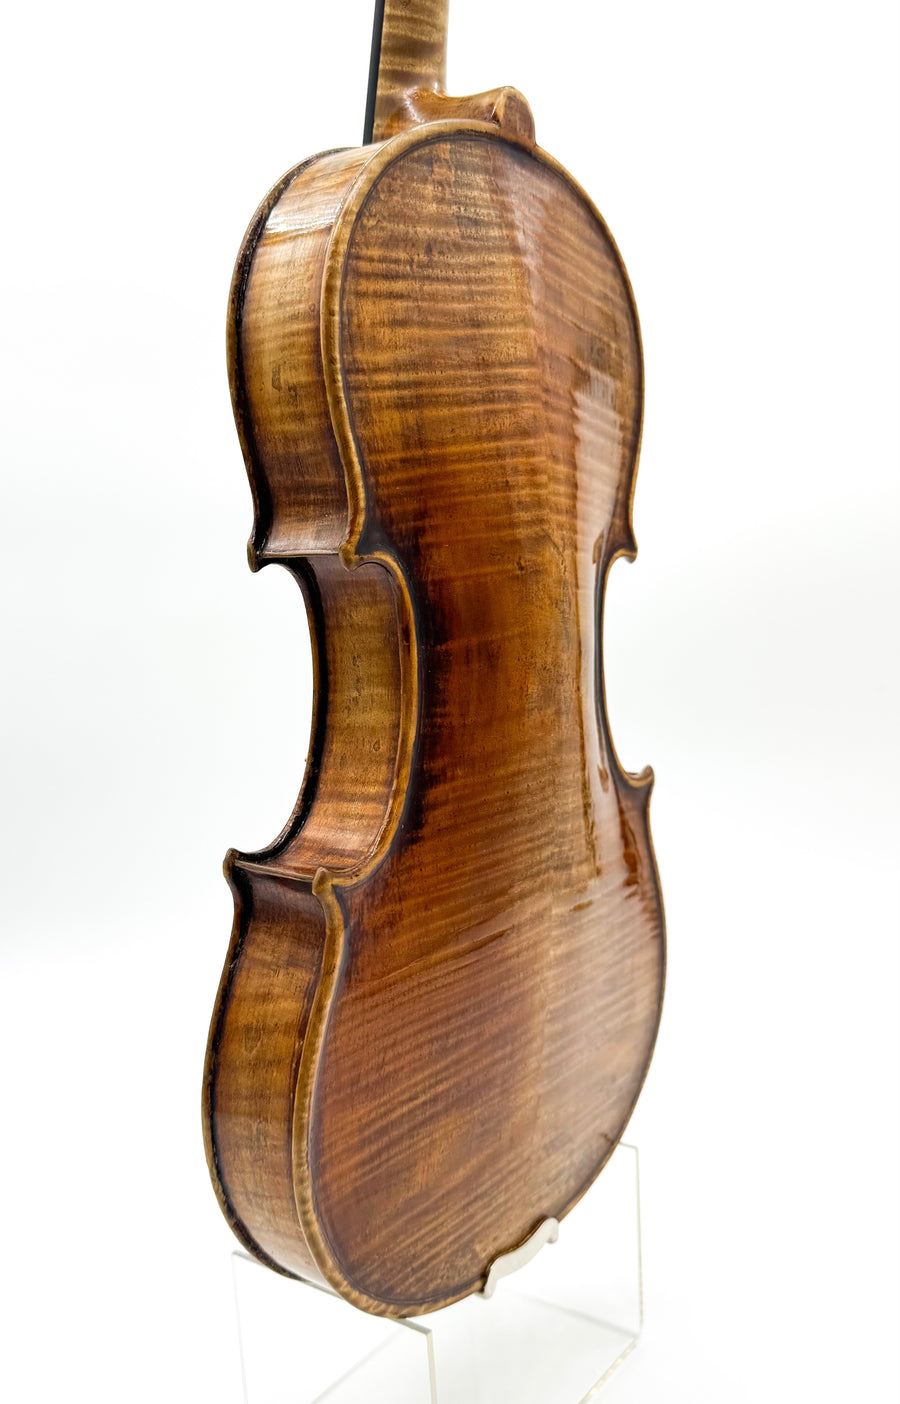 A Beautiful Violin From German-Bohemian Schonbach, 1900-1910.